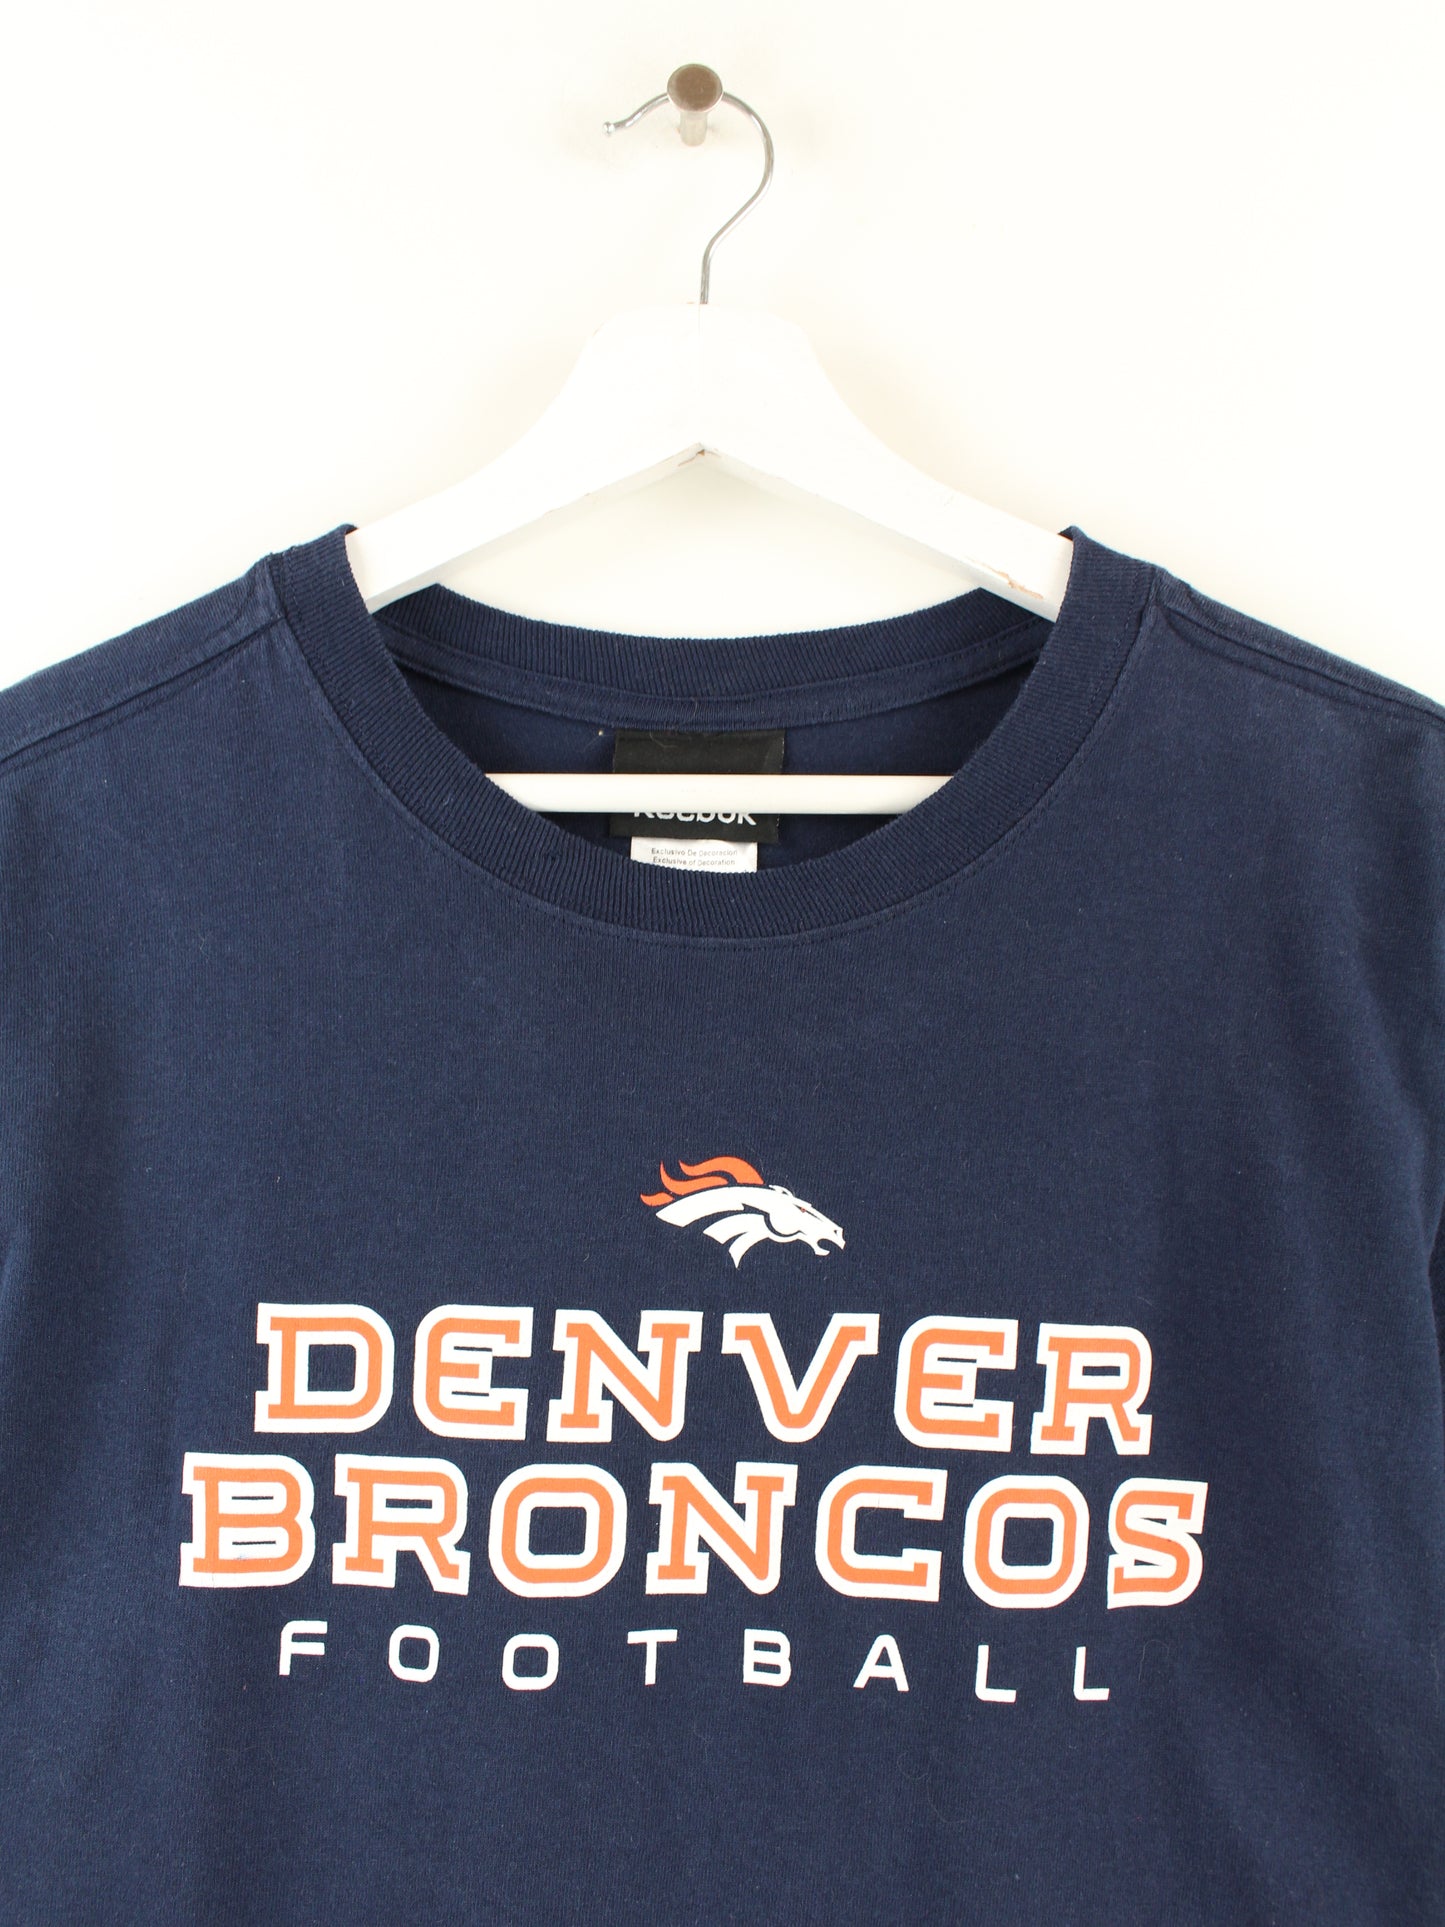 Reebok Denver Broncos T-Shirt Blau M